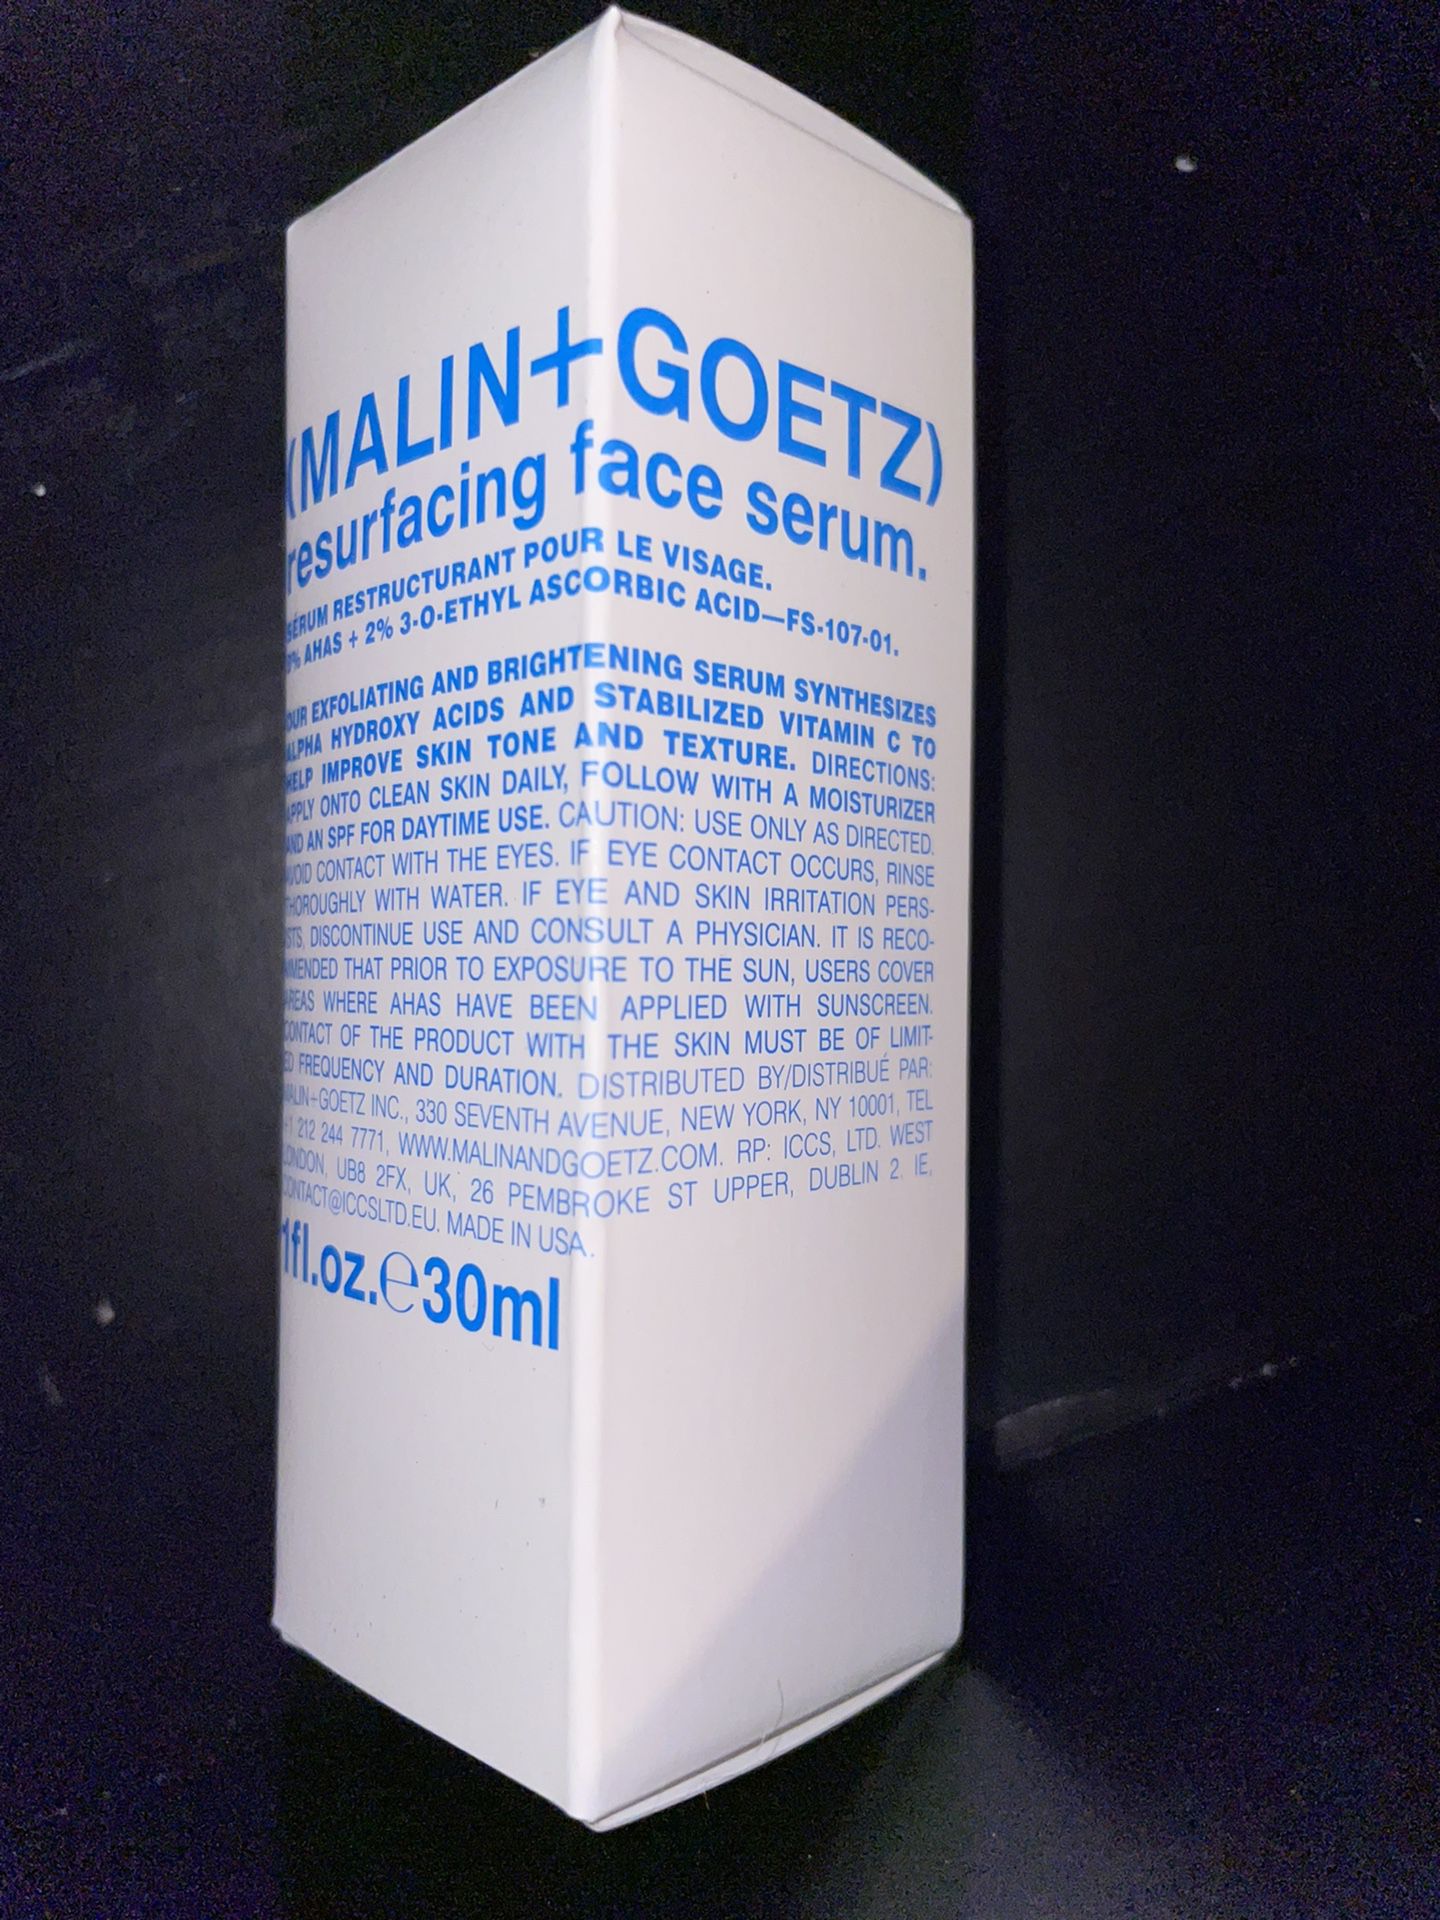 Making Goetz Resurfacing Face Serum